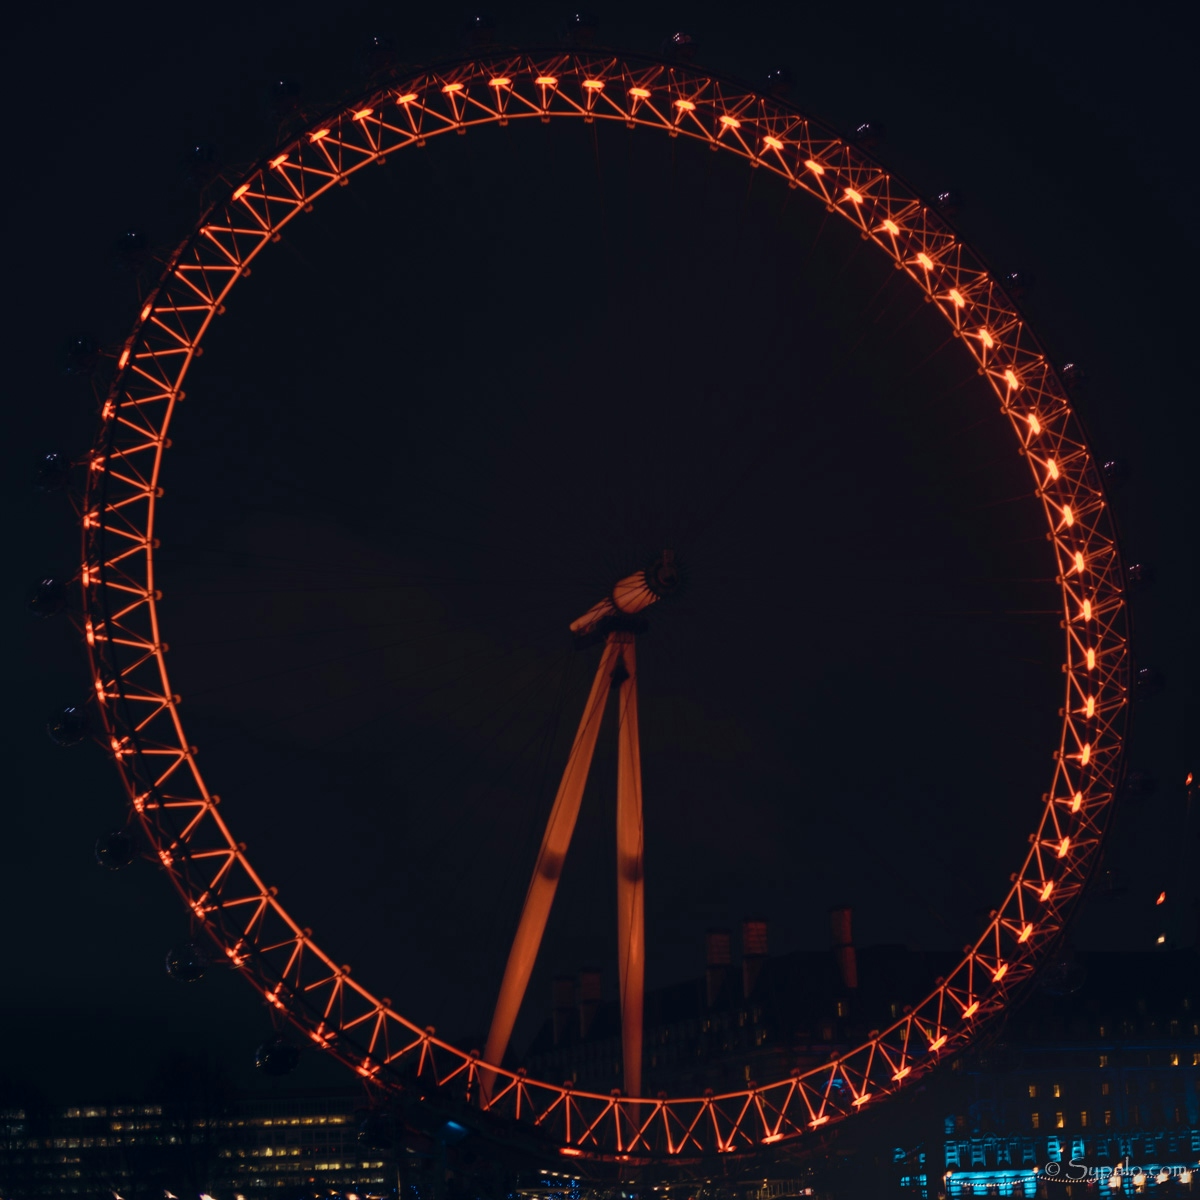 The London Eye carousel night photo